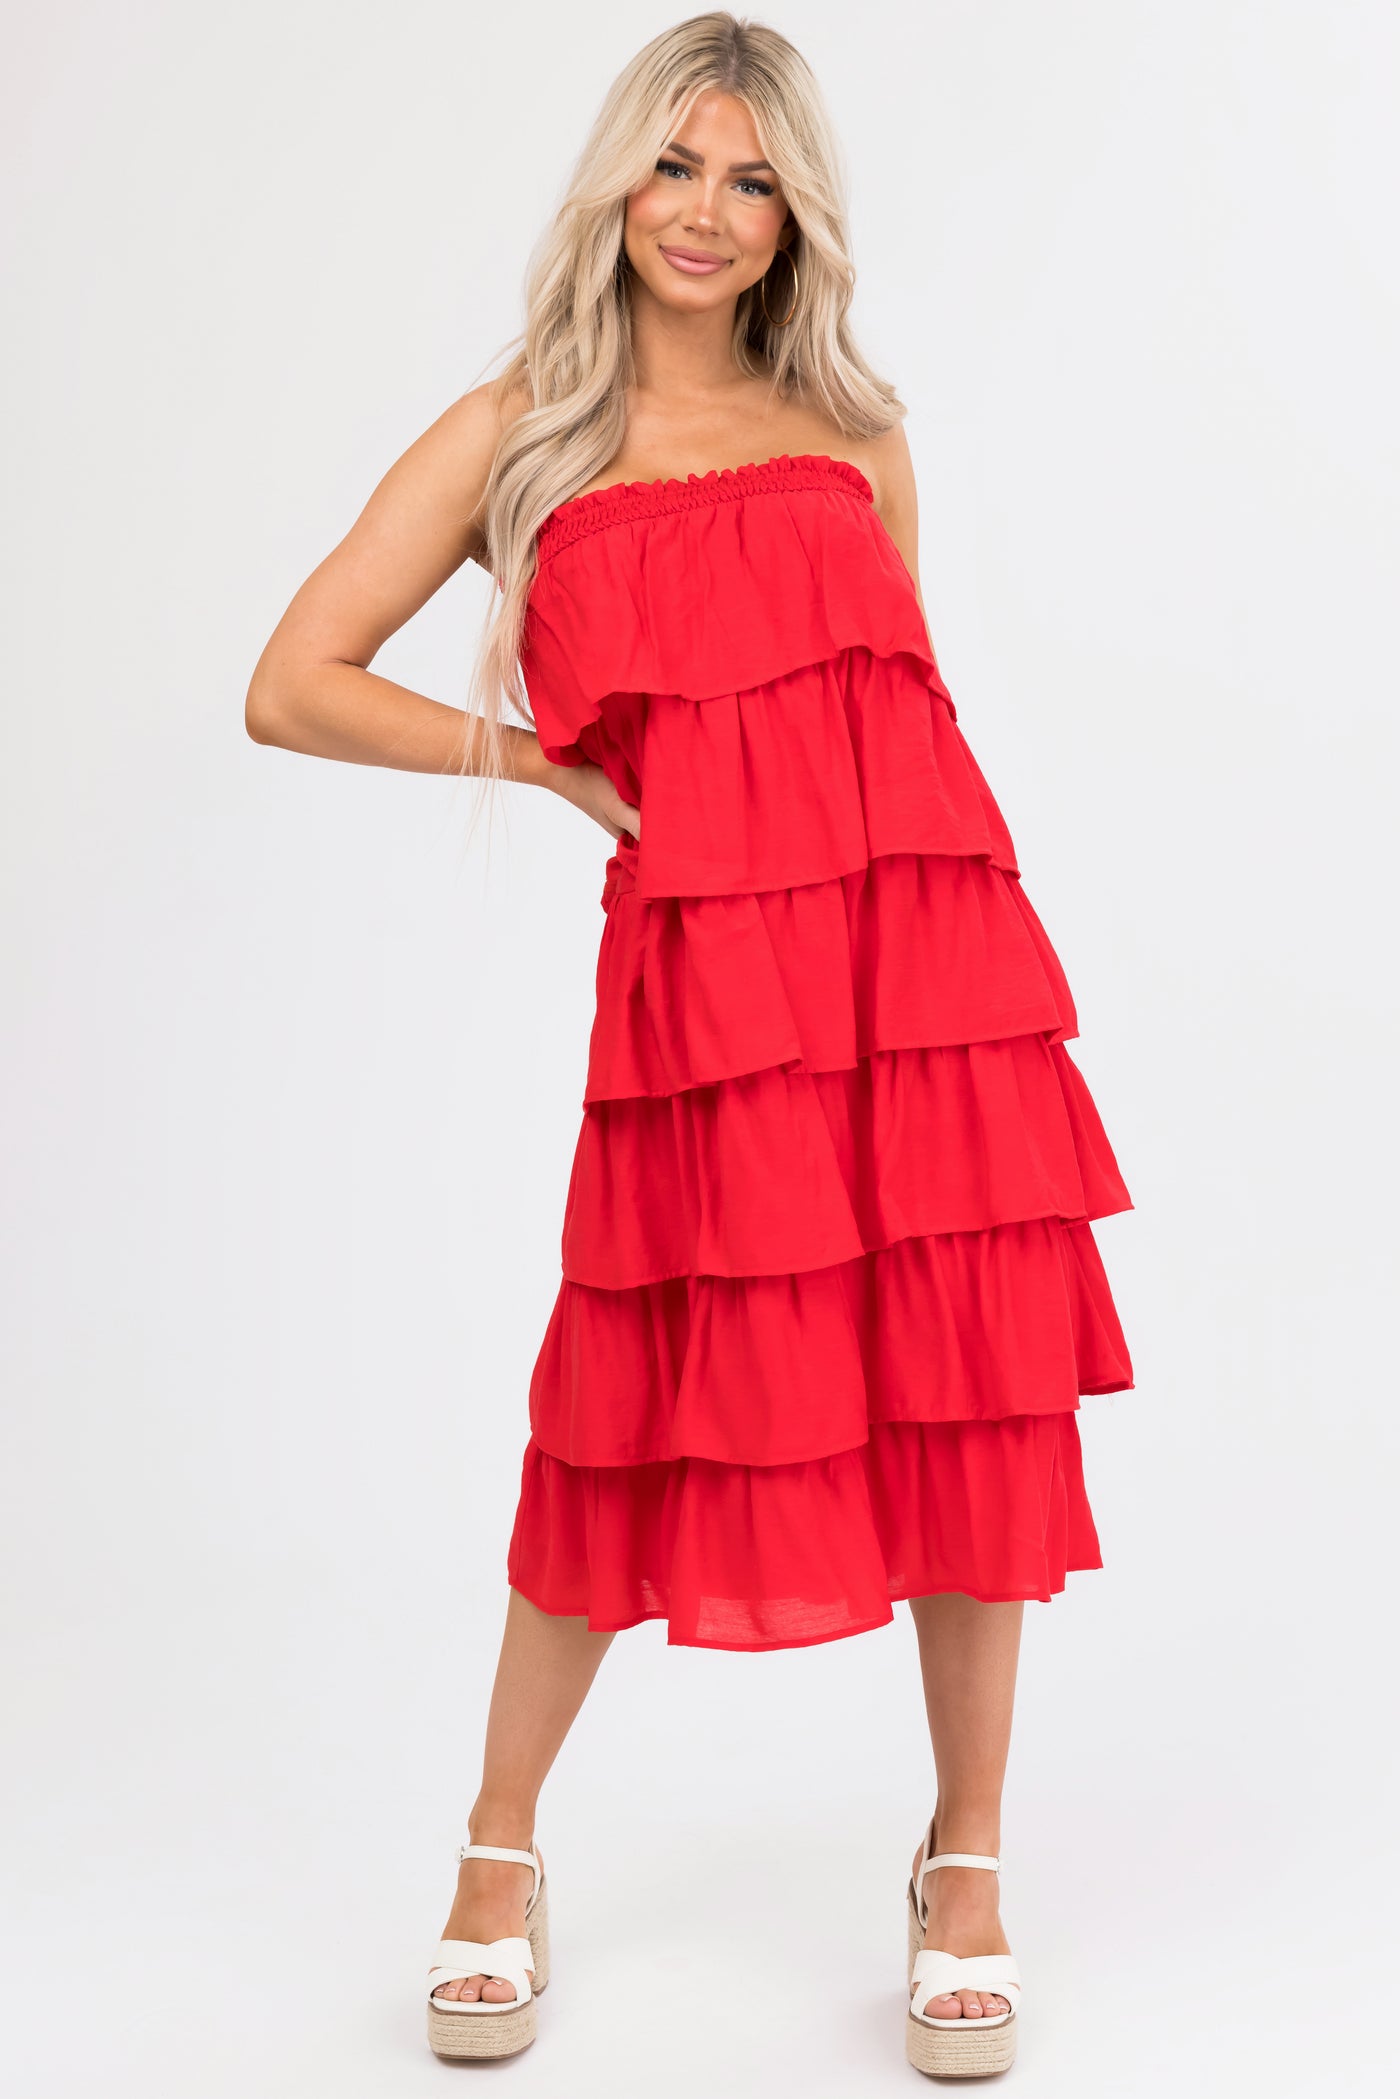 Scarlet Ruffle Convertible Maxi Skirt Midi Dress